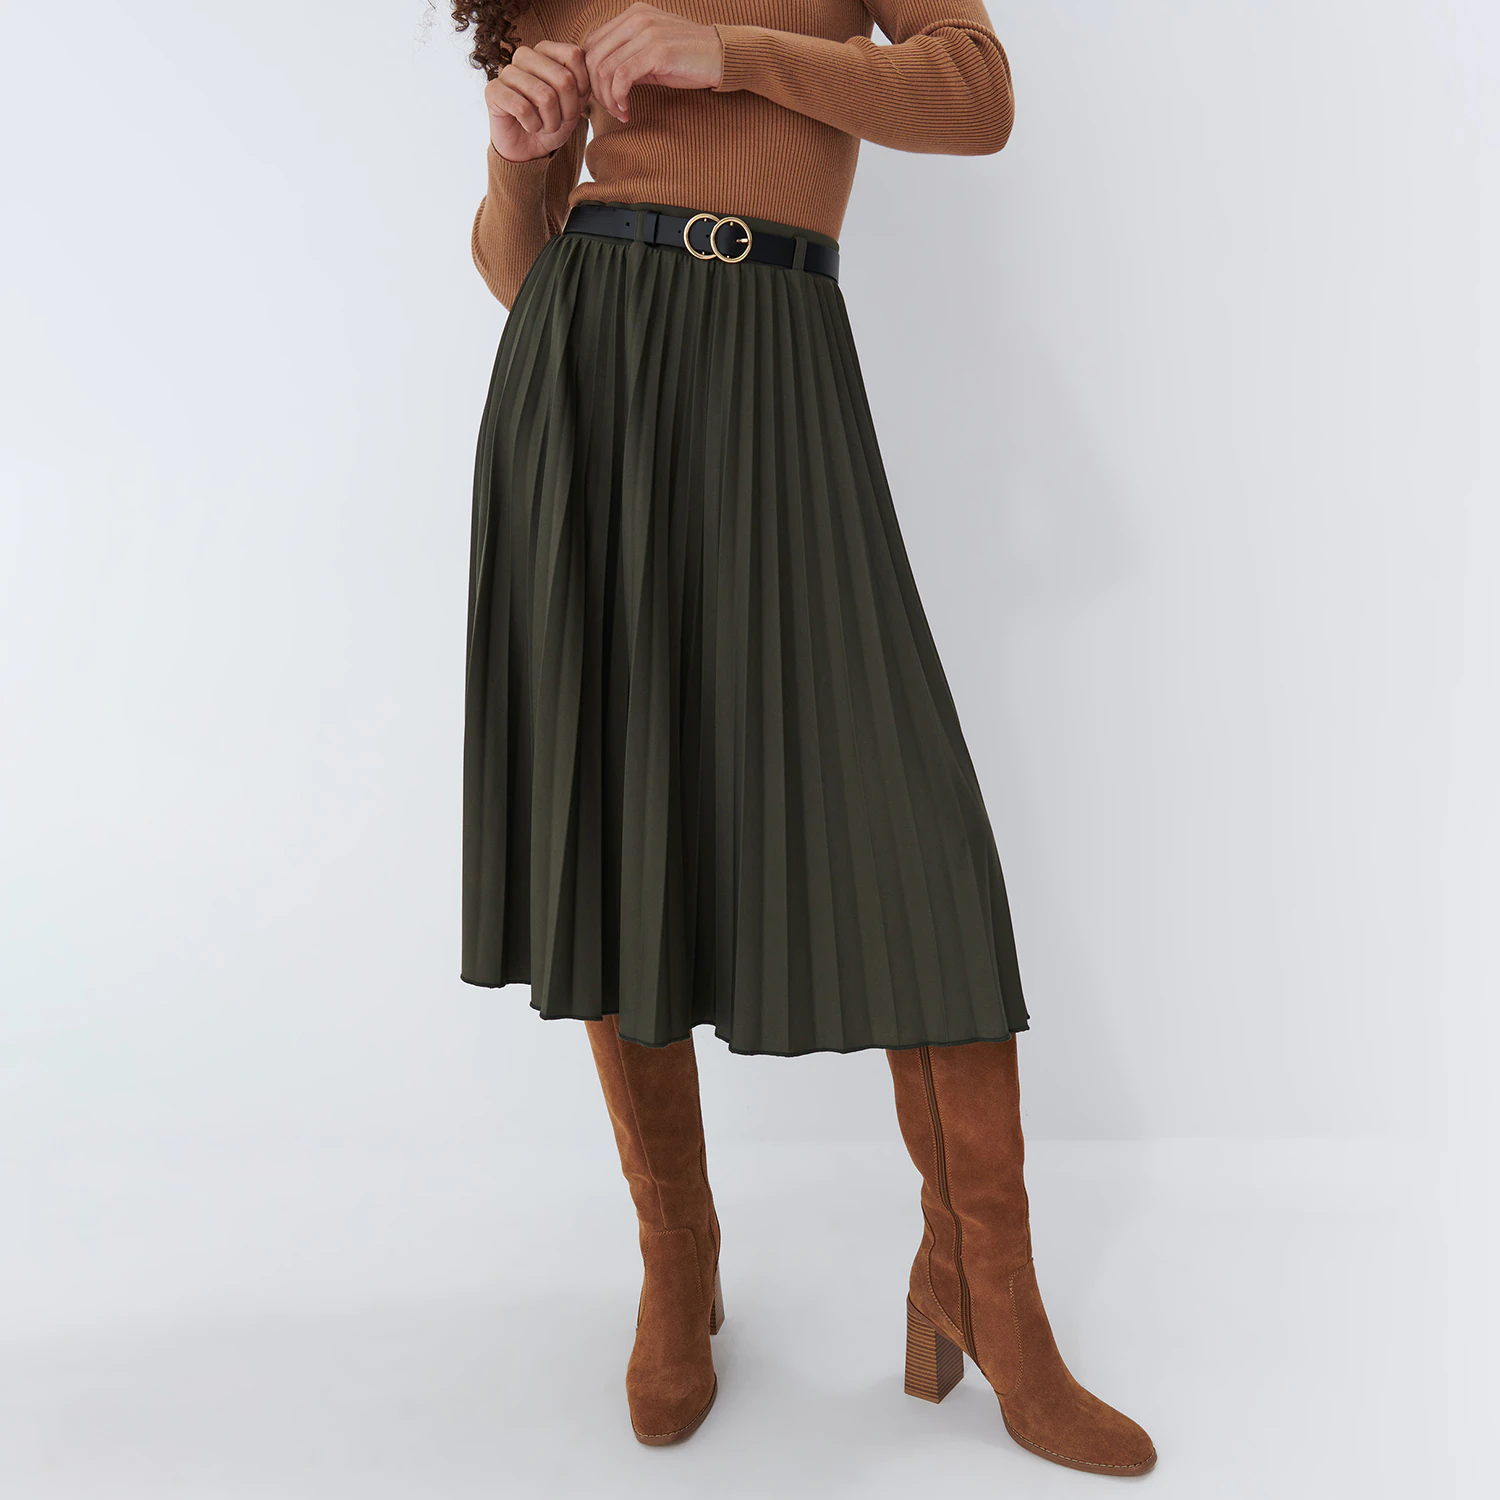 Mohito - Plisowana spódnica mini z paskiem - Khaki Mohito